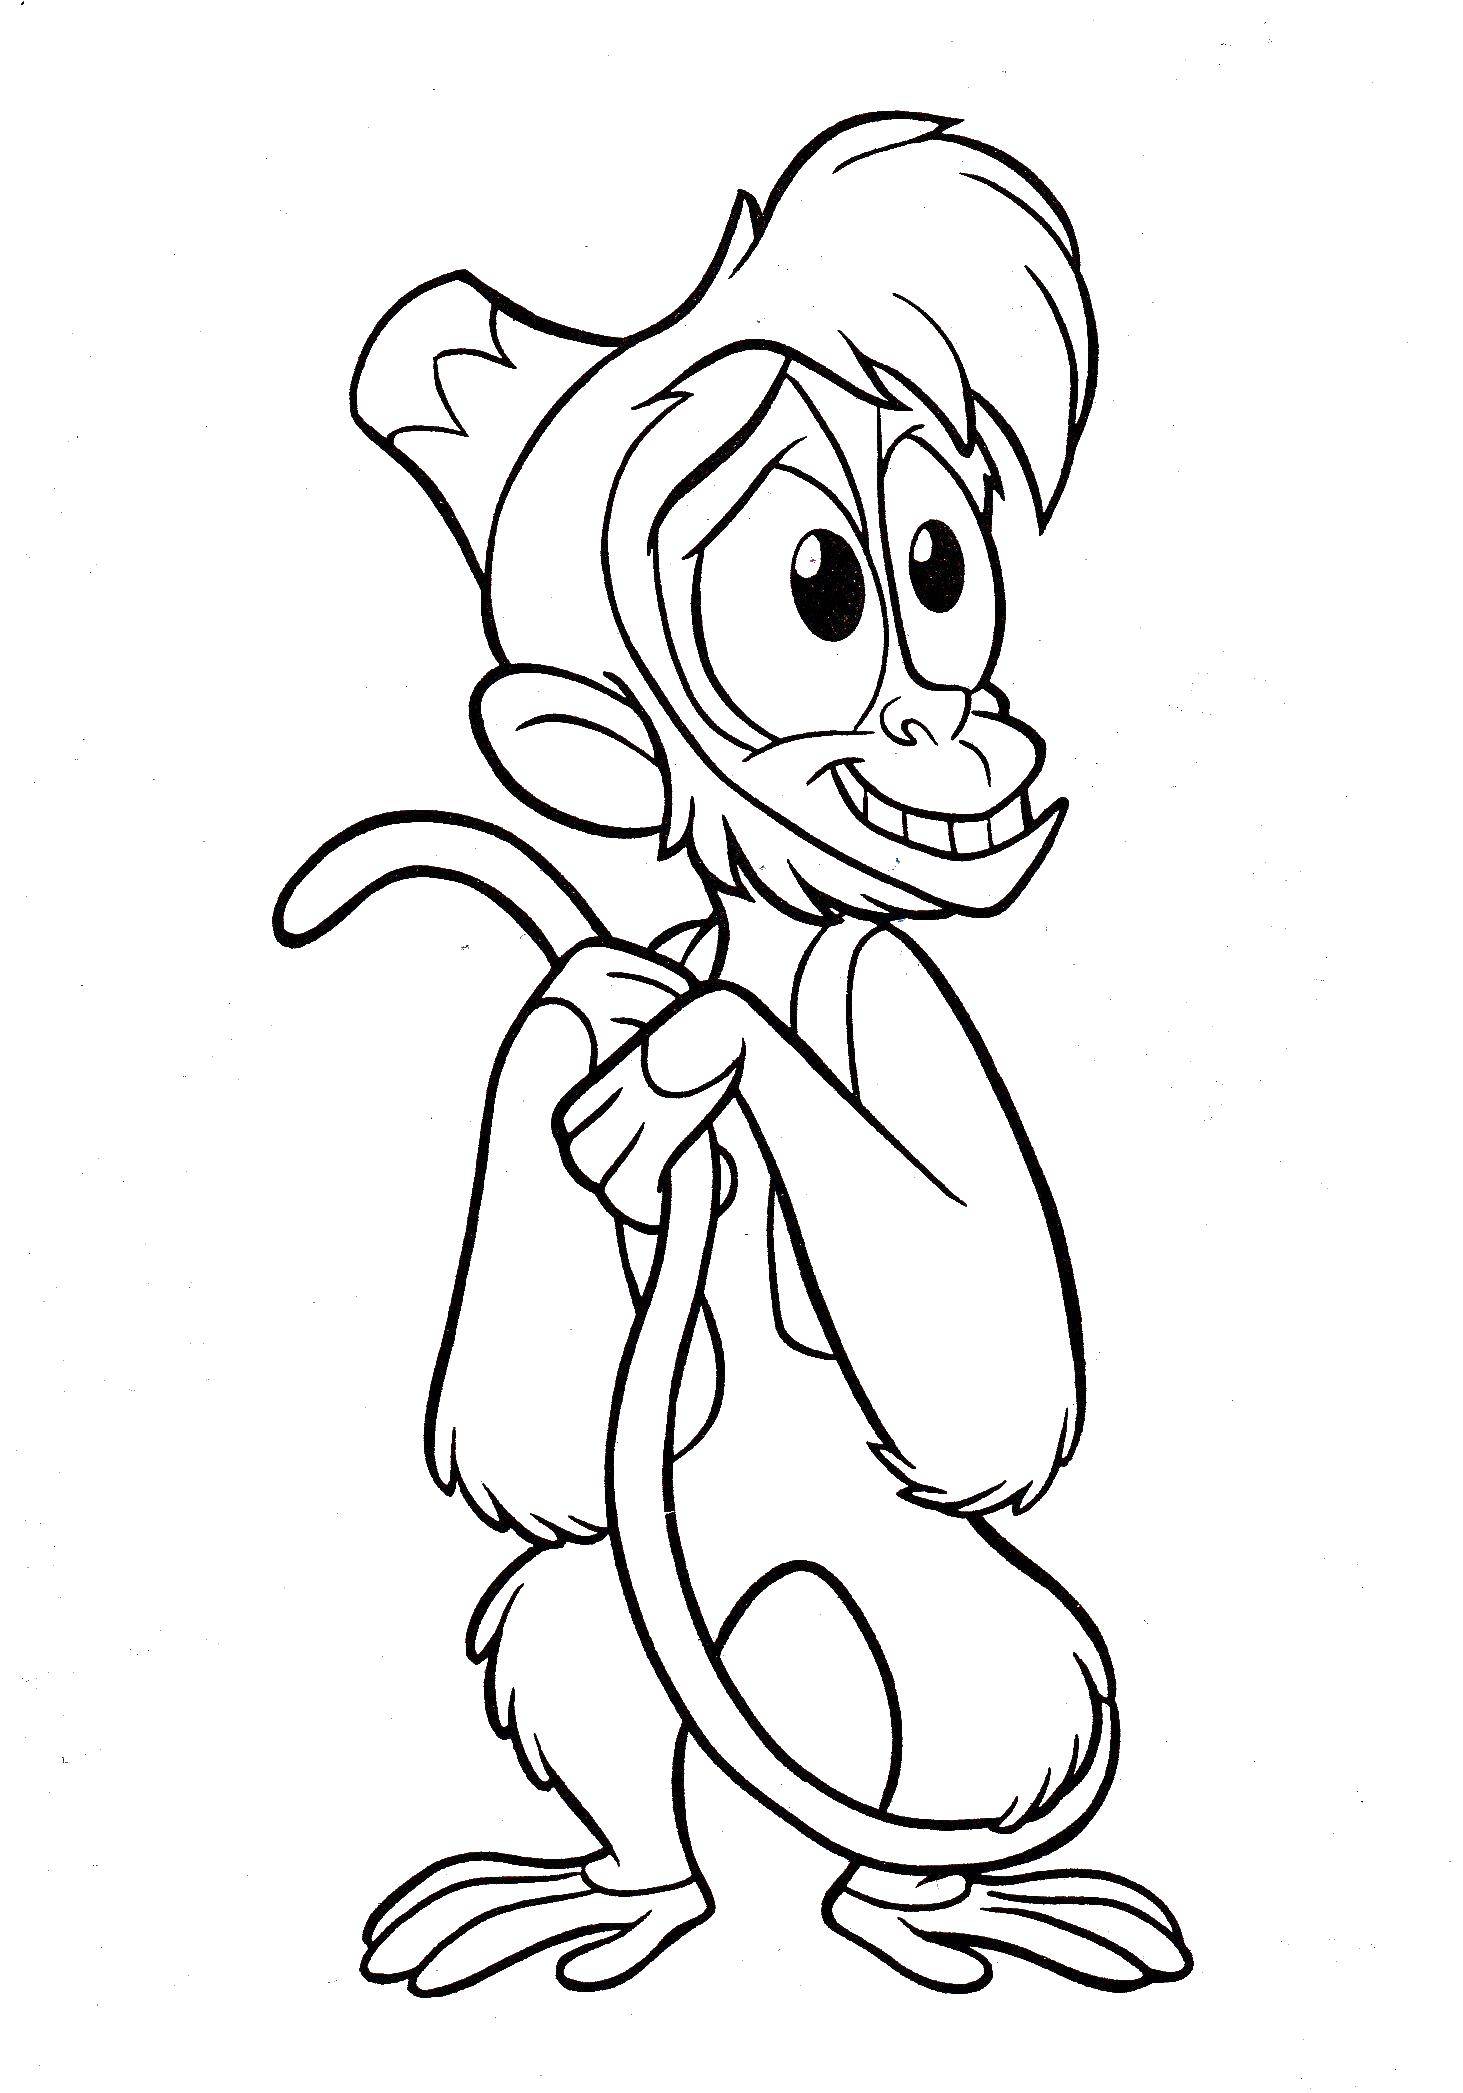 Coloring Monkey, Abu. Category Disney cartoons. Tags:  Disney, Aladdin, Jasmine, Abu.